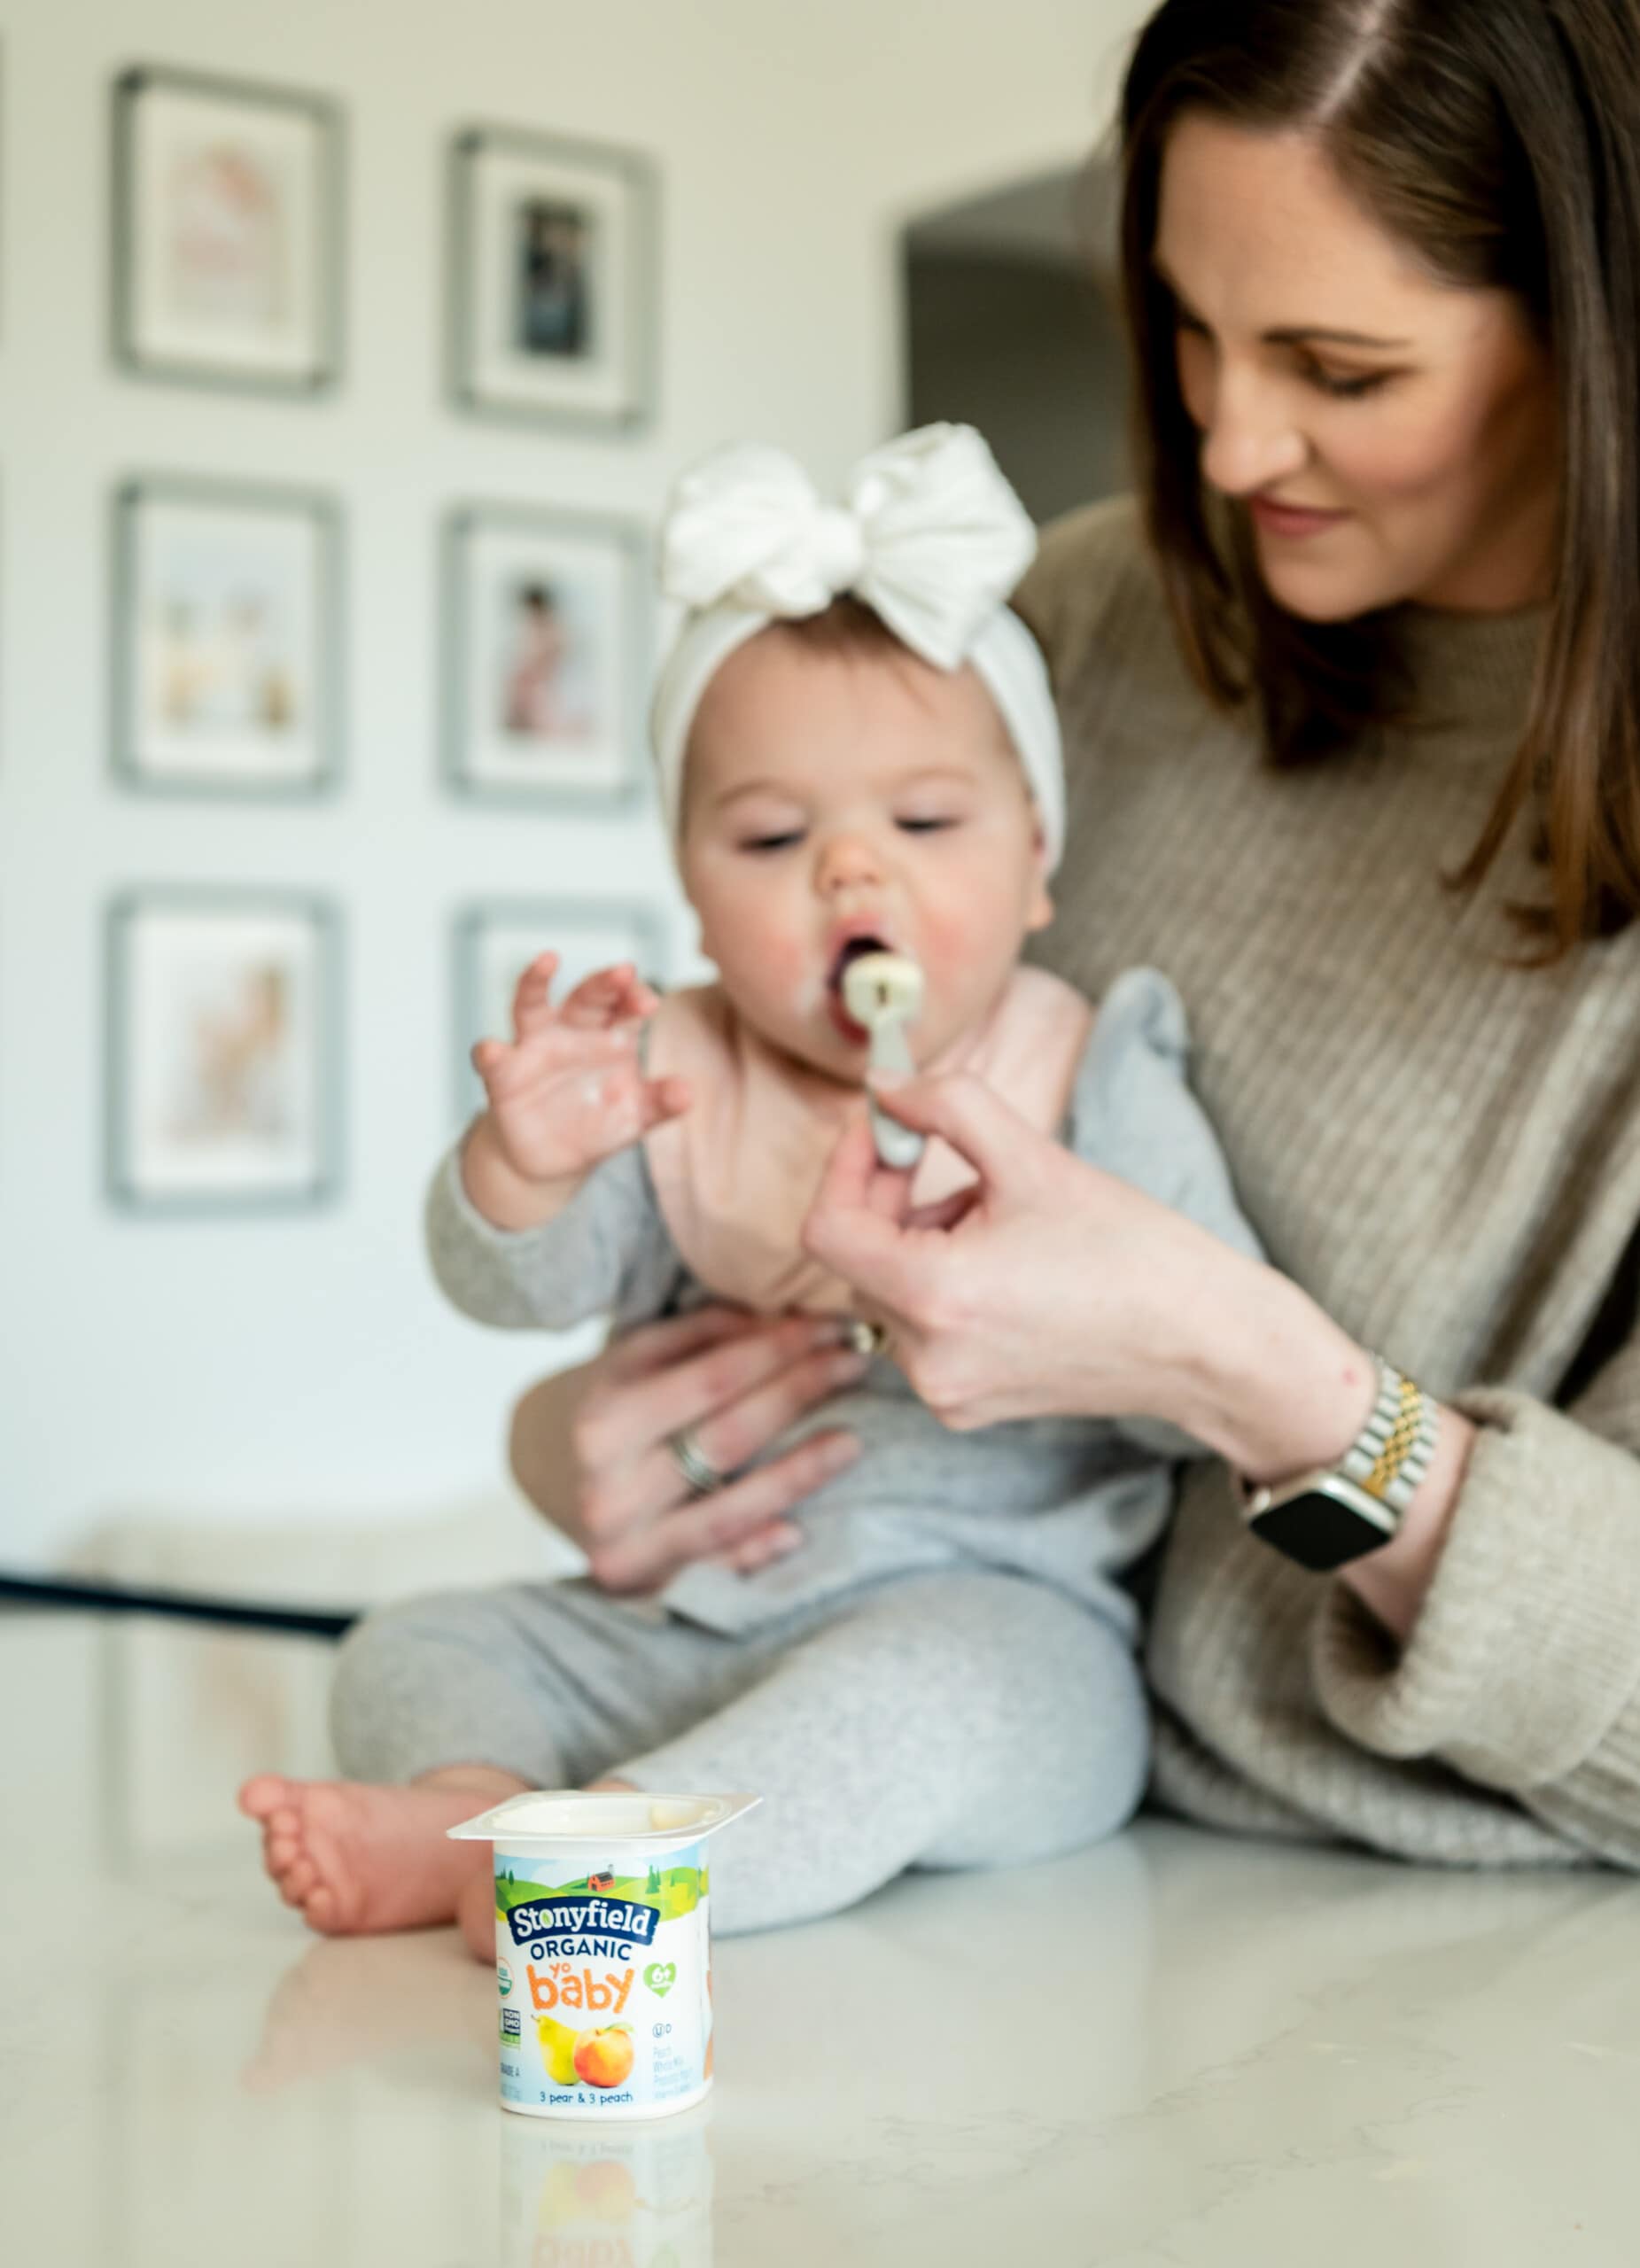 Baby eating yogurt on counter with her mom